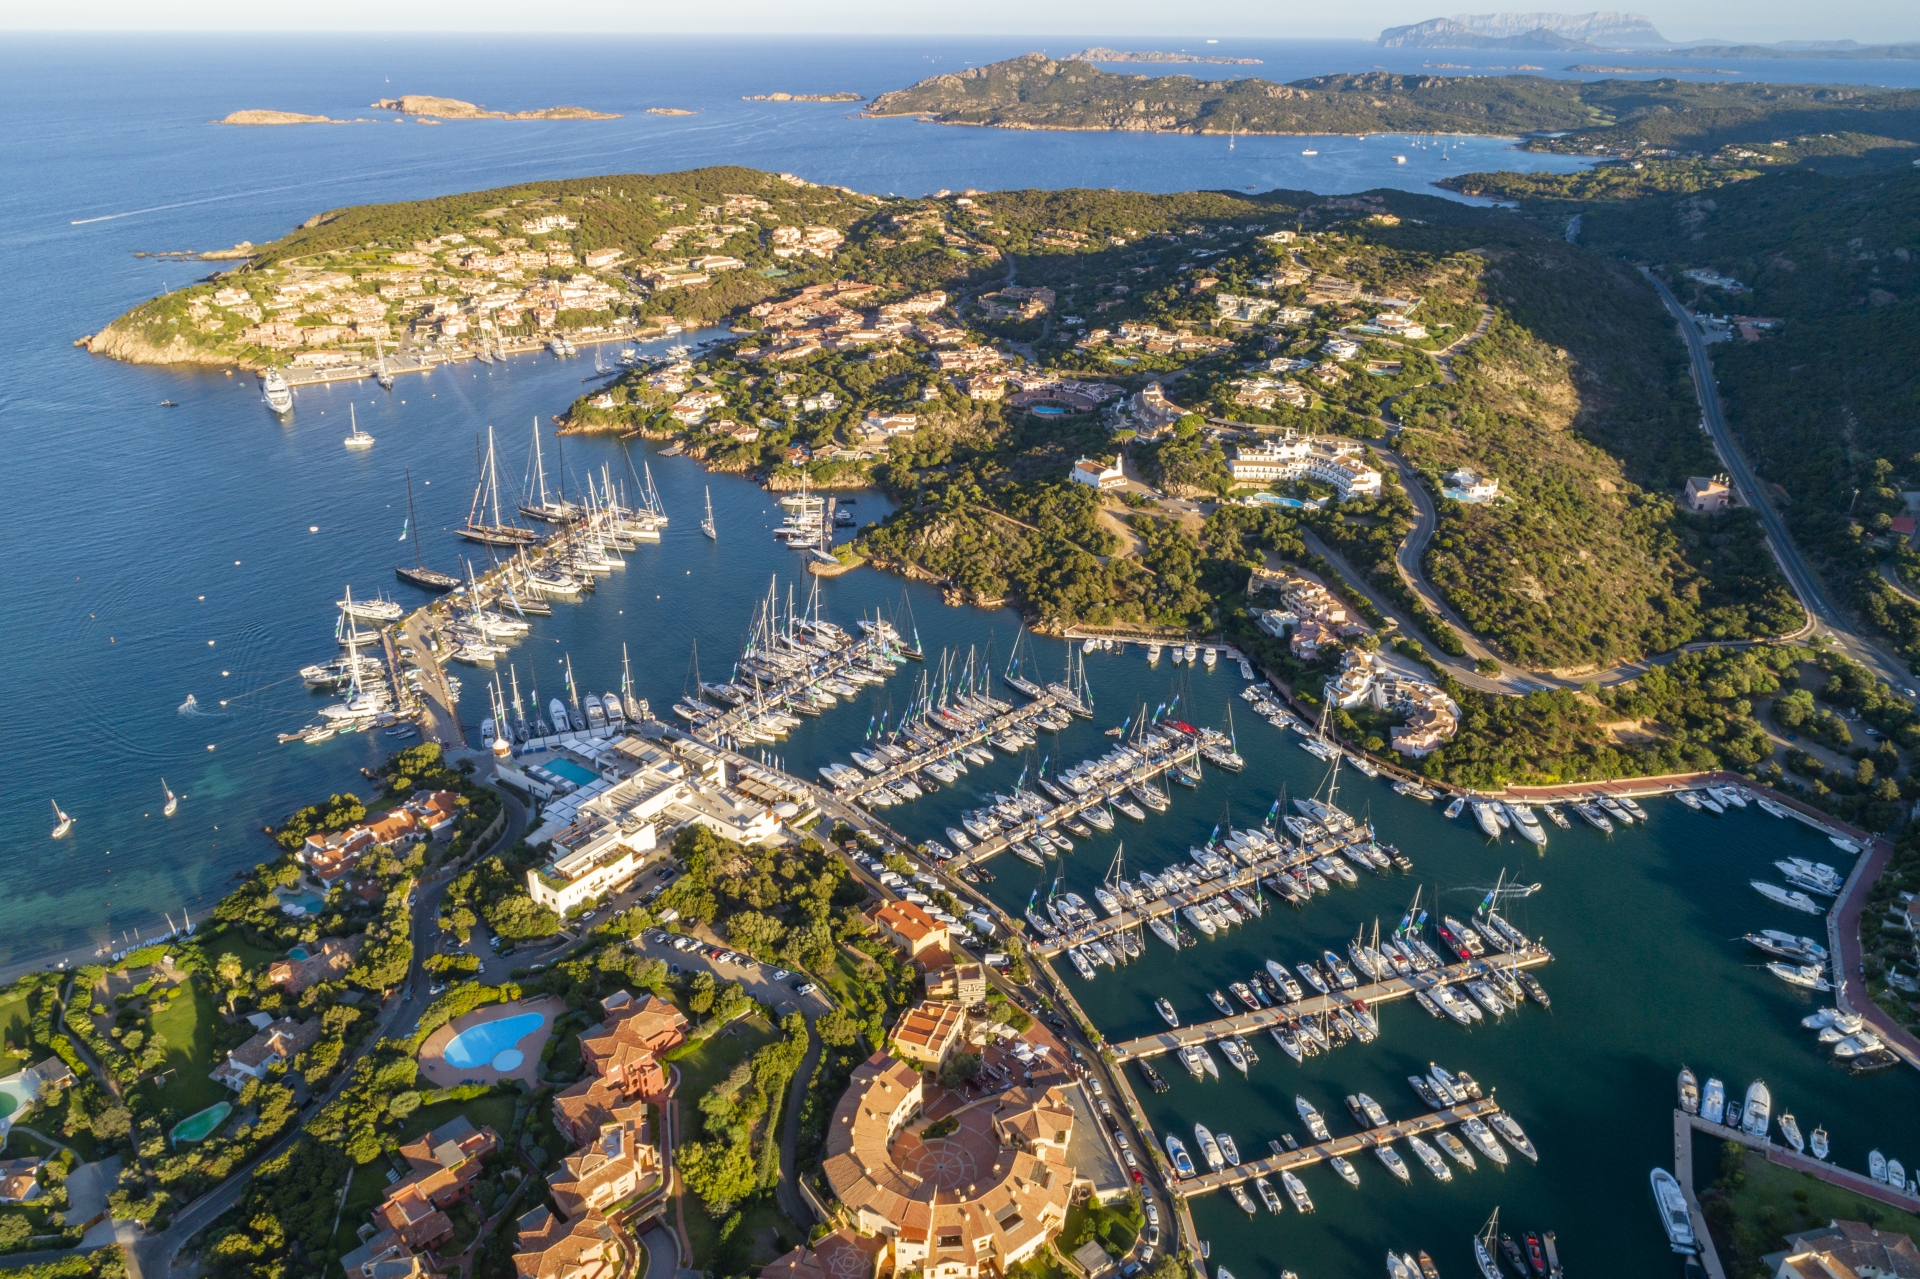 YCCS opens for 2023 season - NEWS - Yacht Club Costa Smeralda